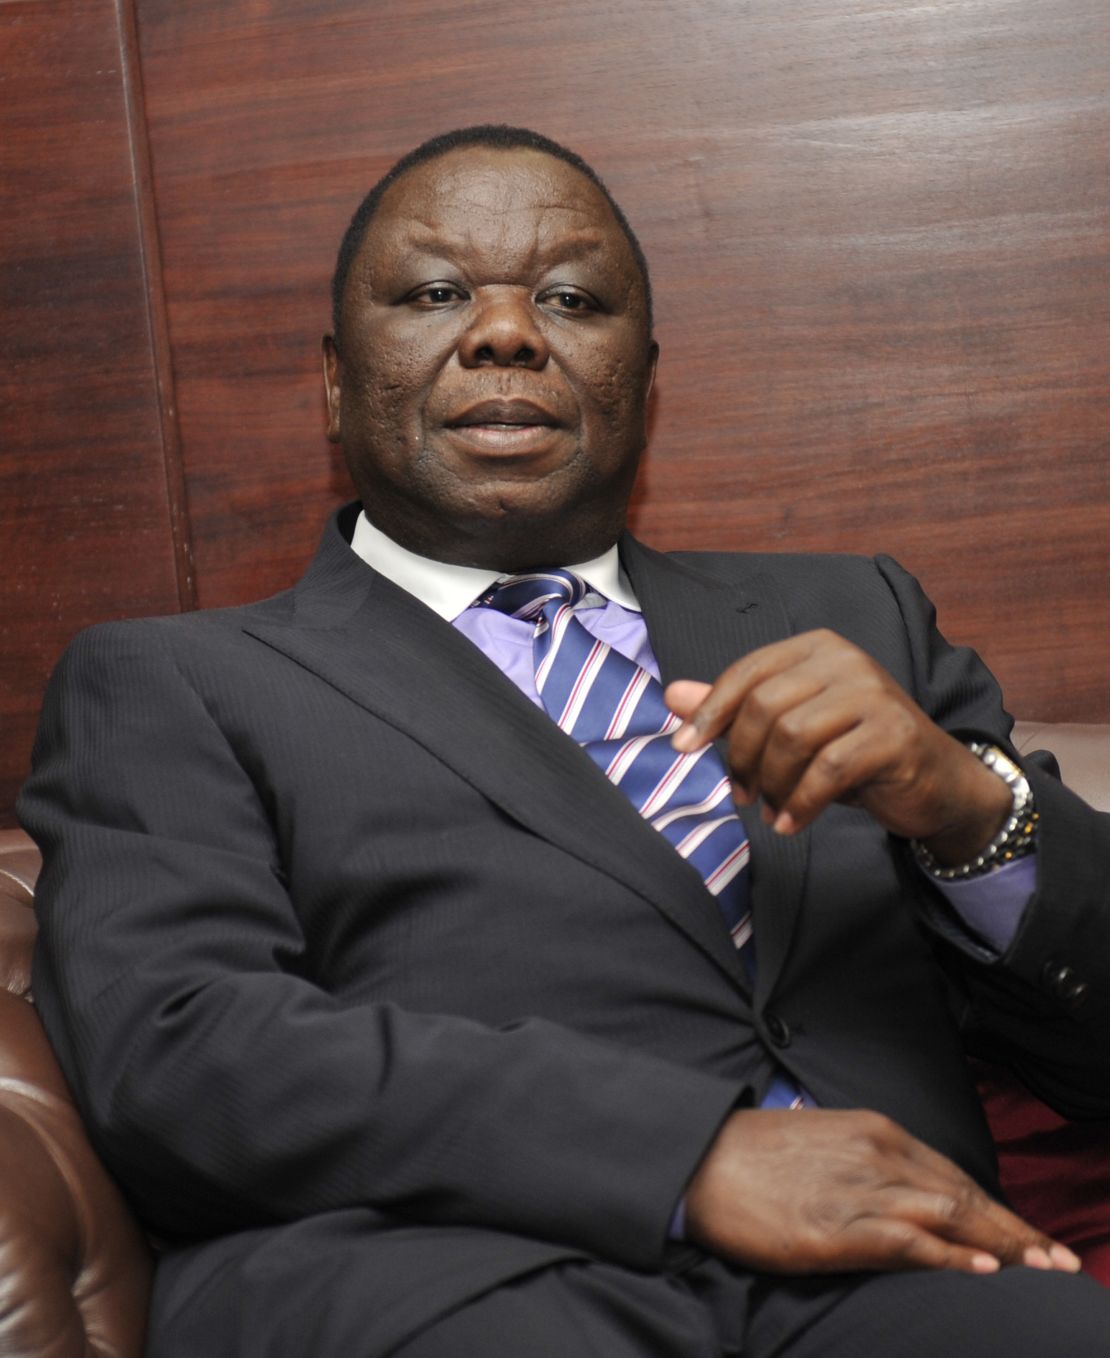 Zimbabwe's former Prime Minister Morgan Tsvangirai created the Movement for Democratic Change (MDC) party.